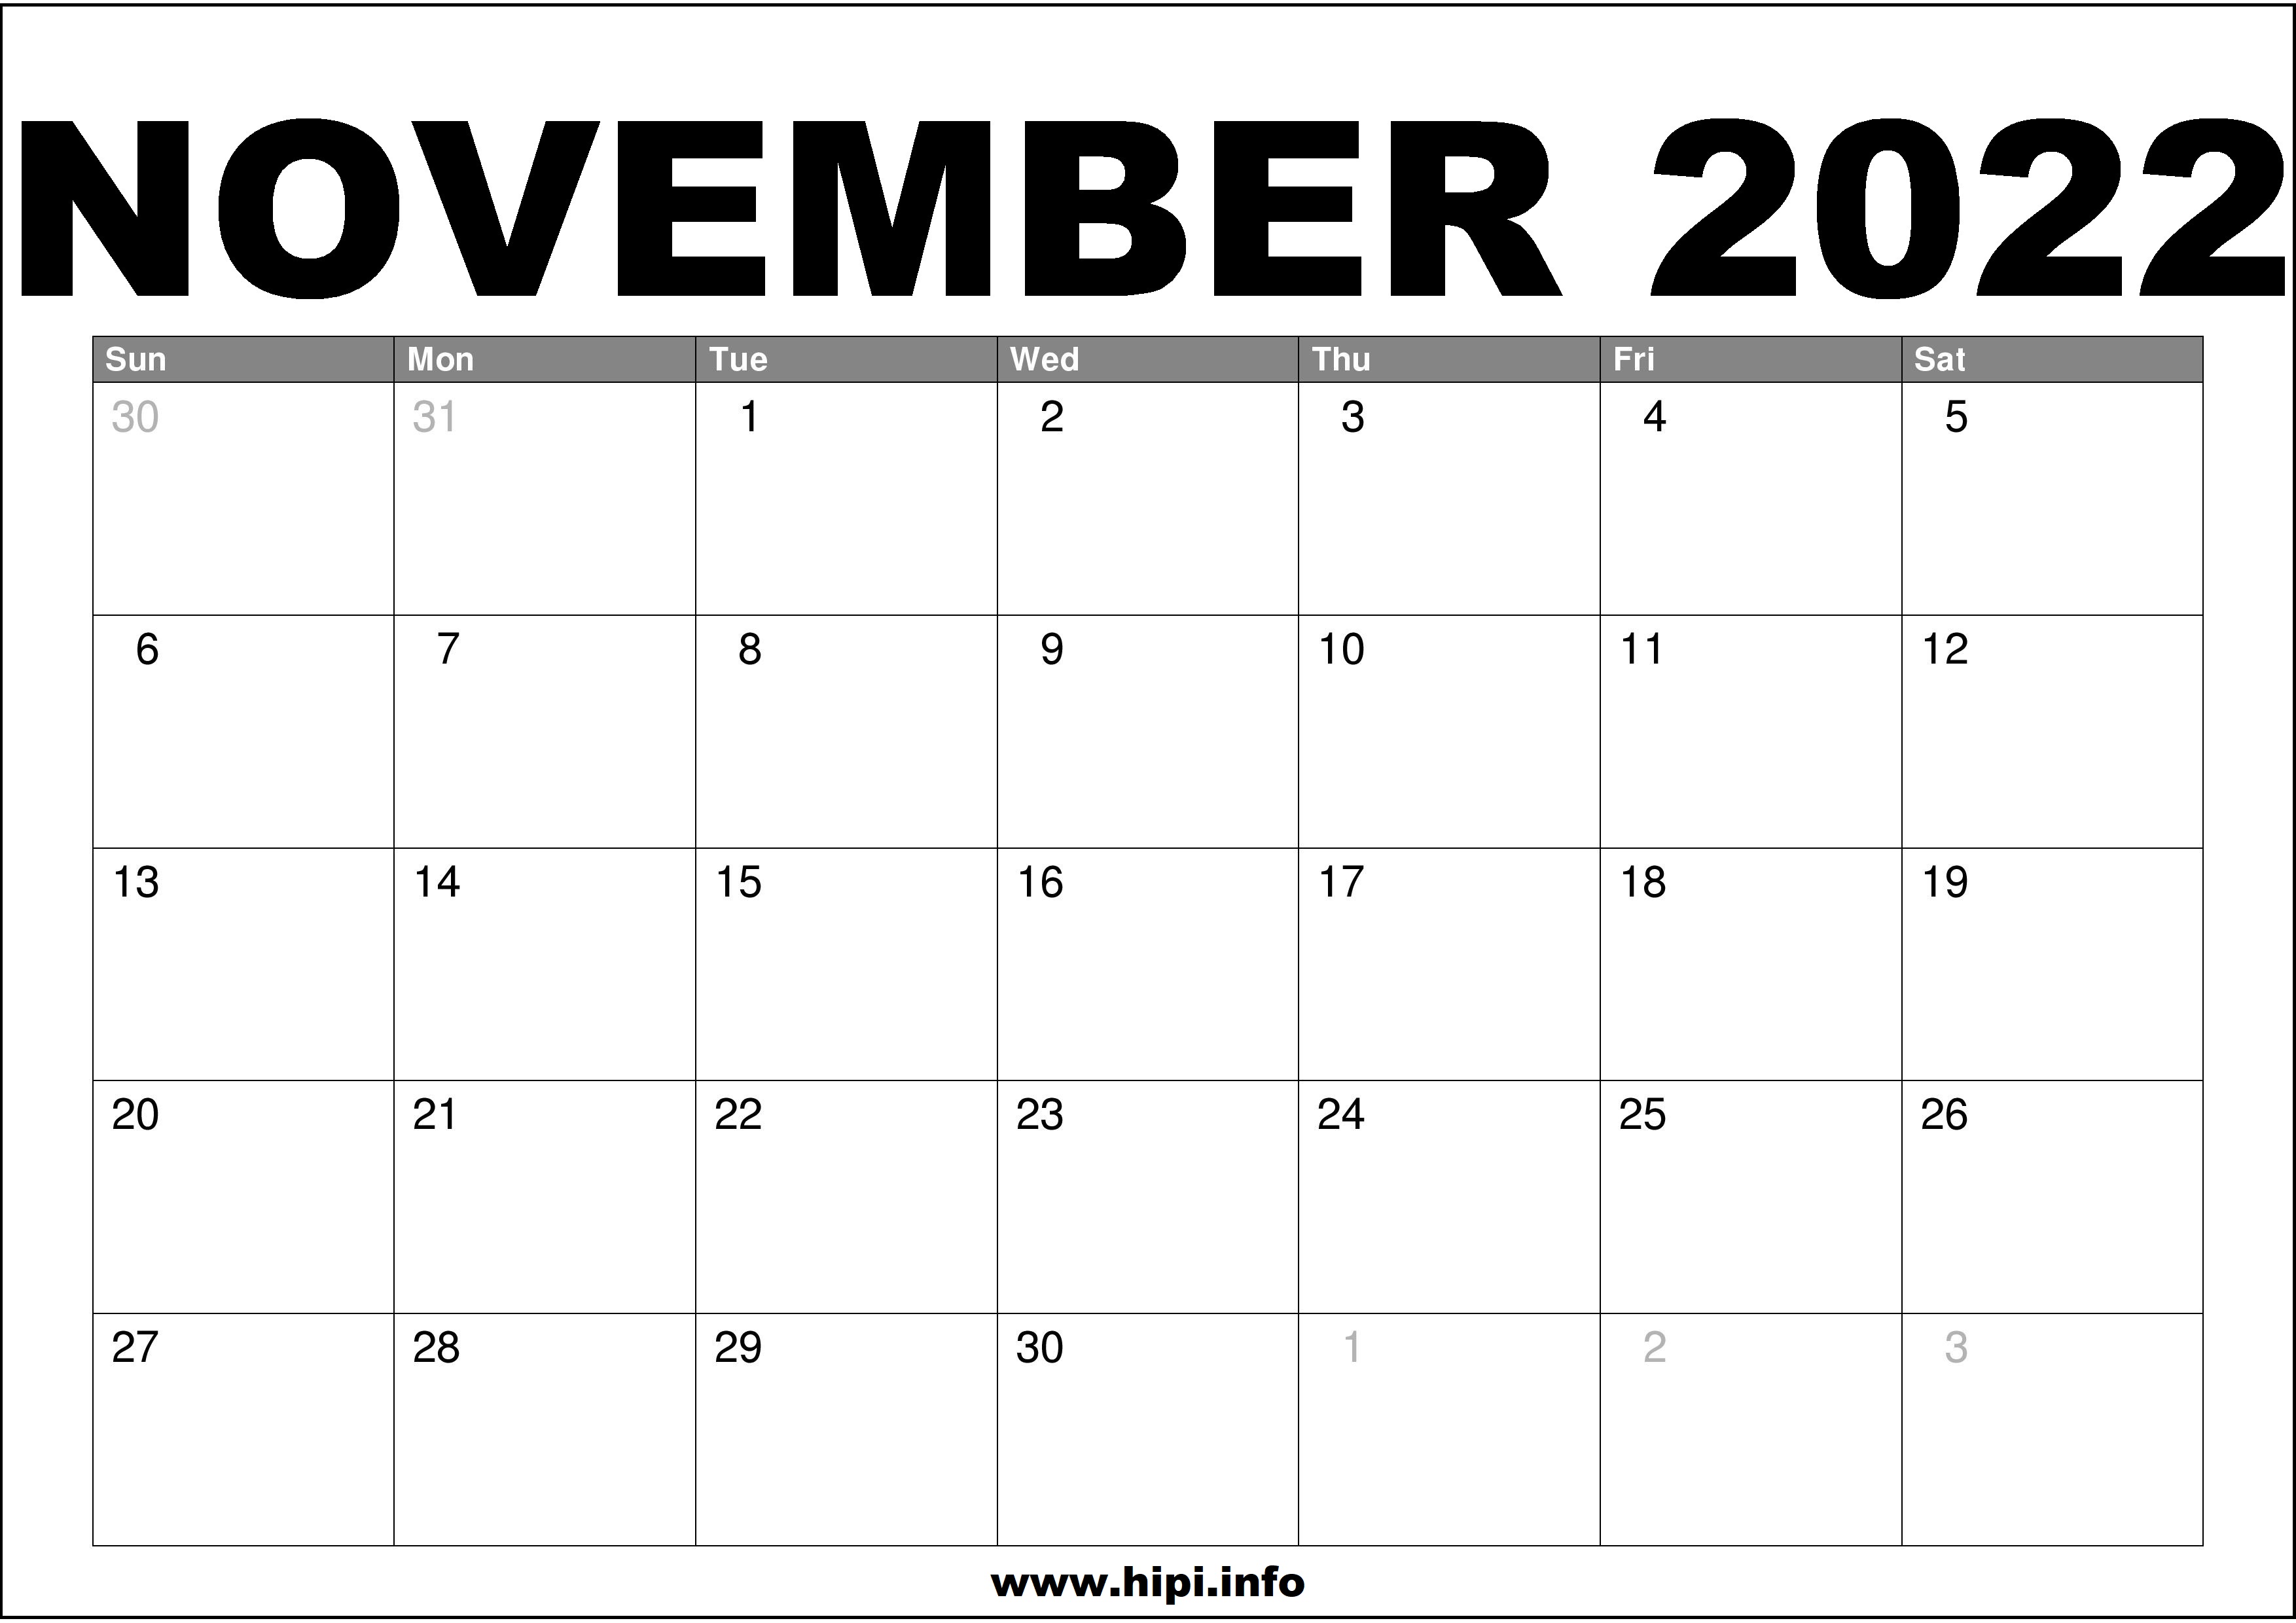 Nov Calendar 2022 November 2022 Calendar Printable Free - Hipi.info | Calendars Printable Free